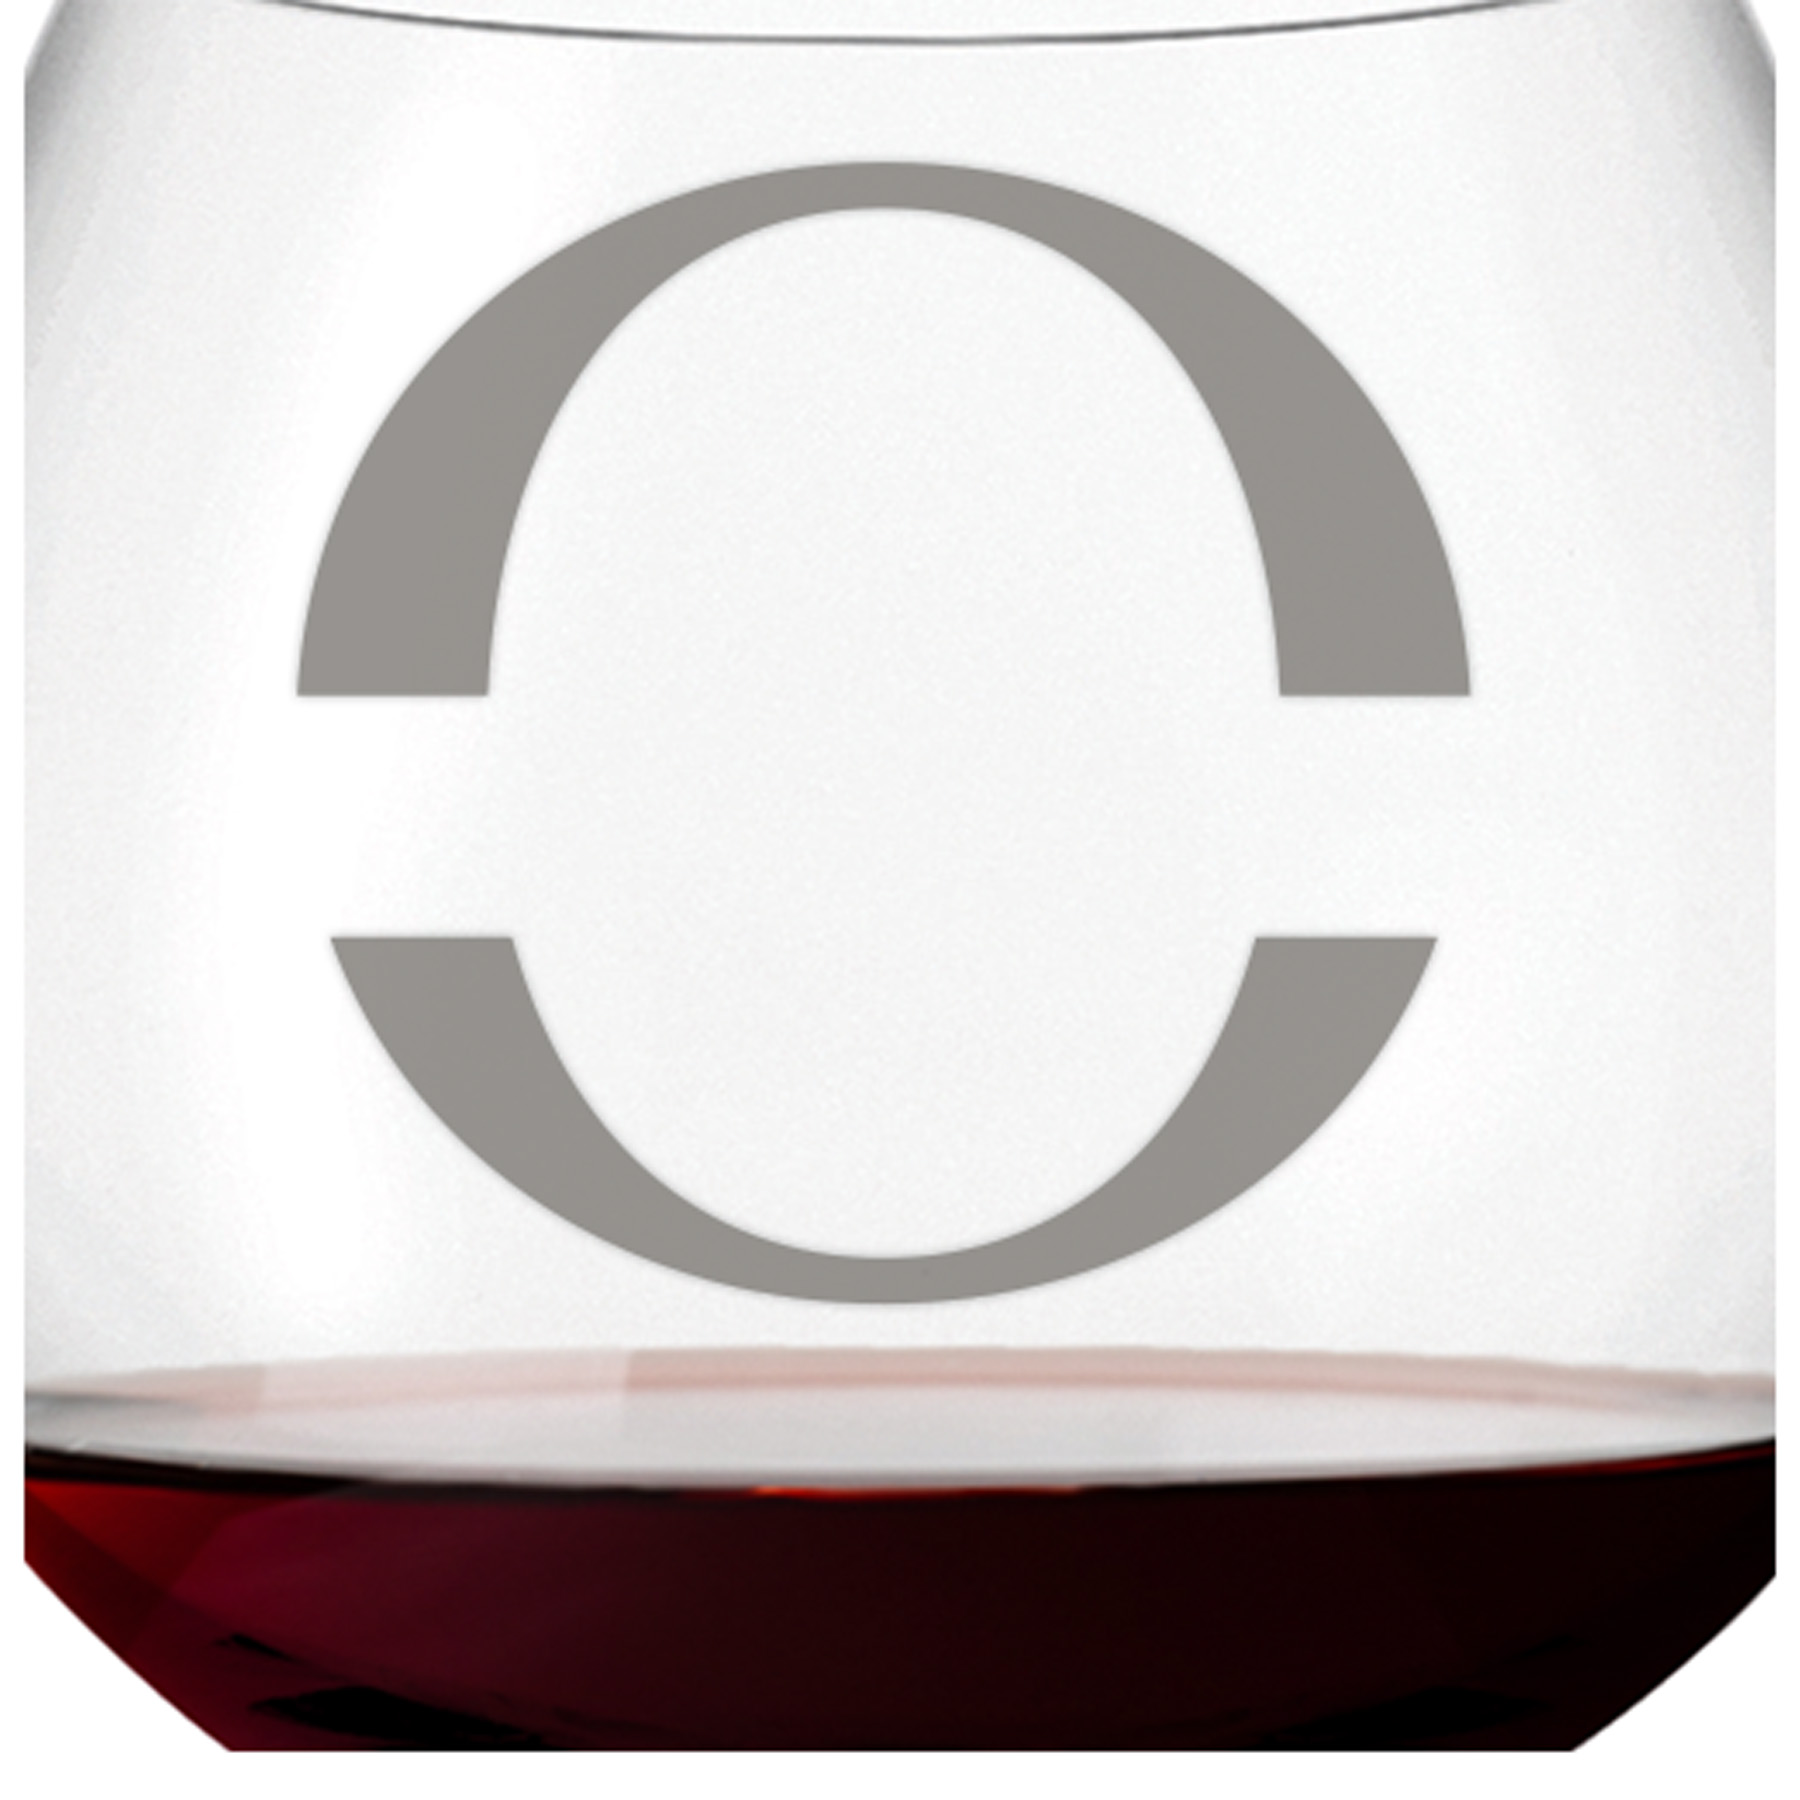 Leonardo Burgunderglas Rotweinglas CIAO+ 630ml mit Namen oder Wunschtext graviert (Initialen)